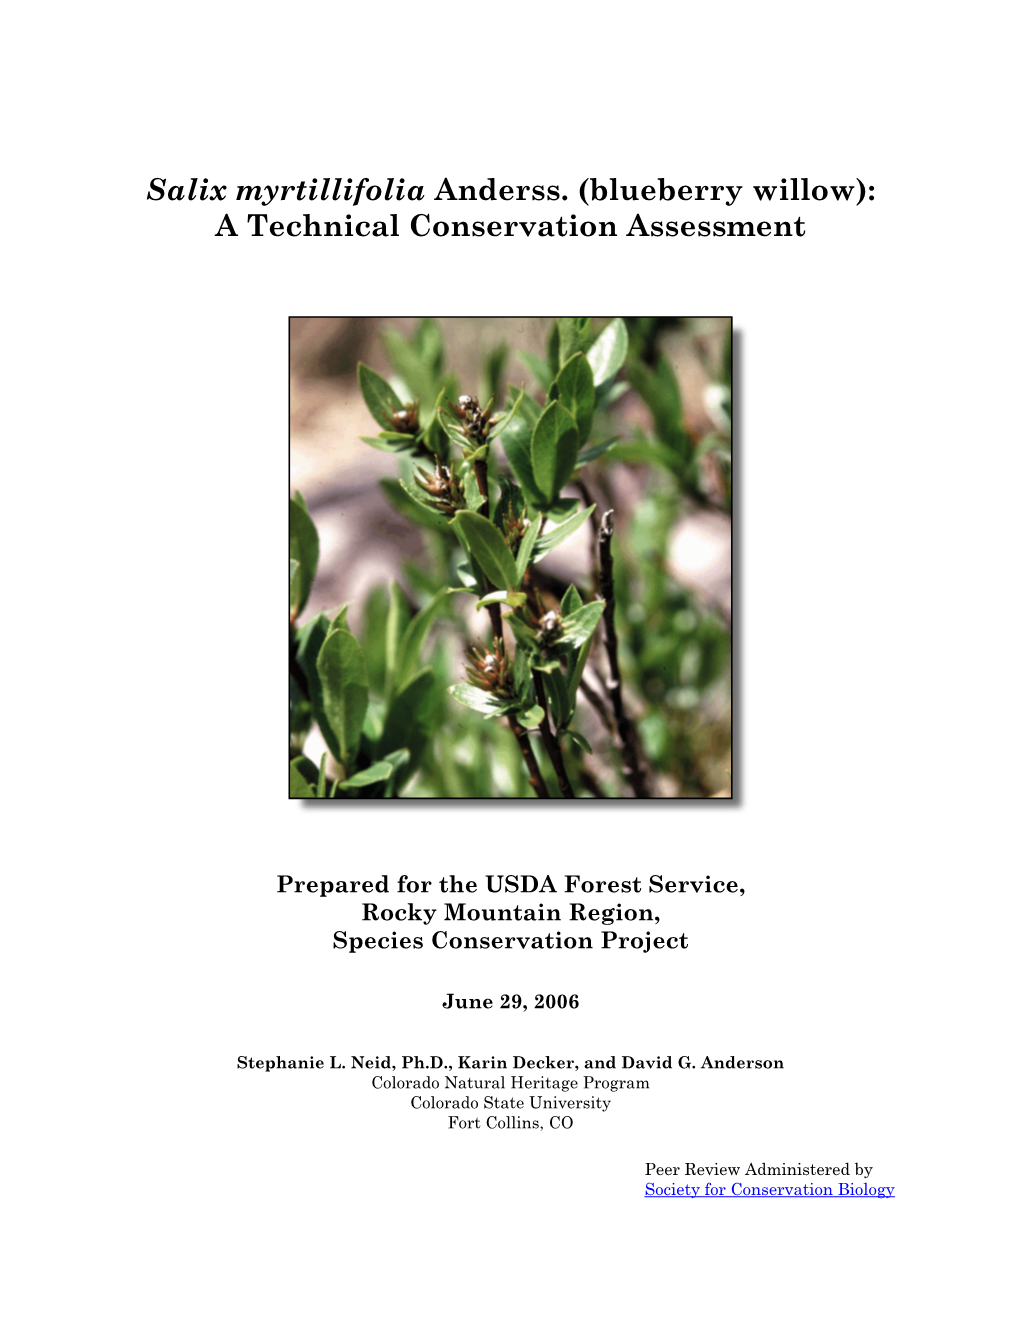 Salix Myrtillifolia Anderss. (Blueberry Willow): a Technical Conservation Assessment